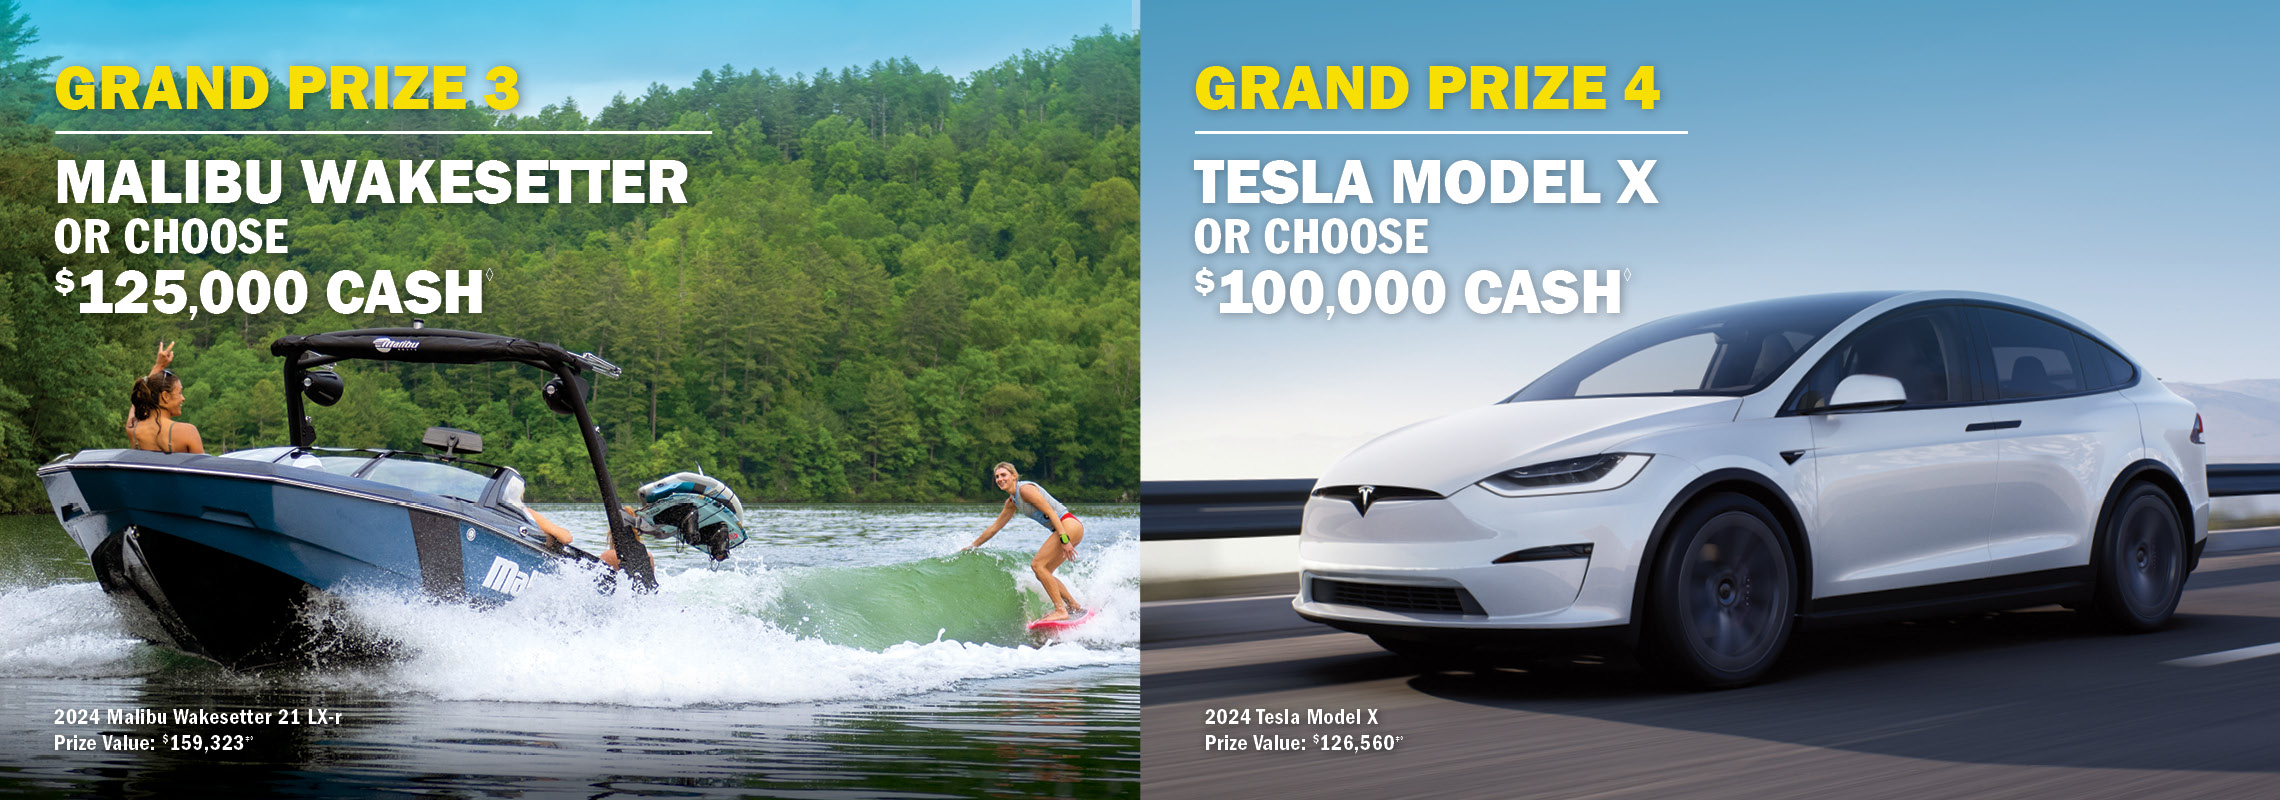 Grand Prize 3 - Malibu Wakesetter or $125,000 cash. Grand Prize 4 - Tesla Model X or $100,000 cash.